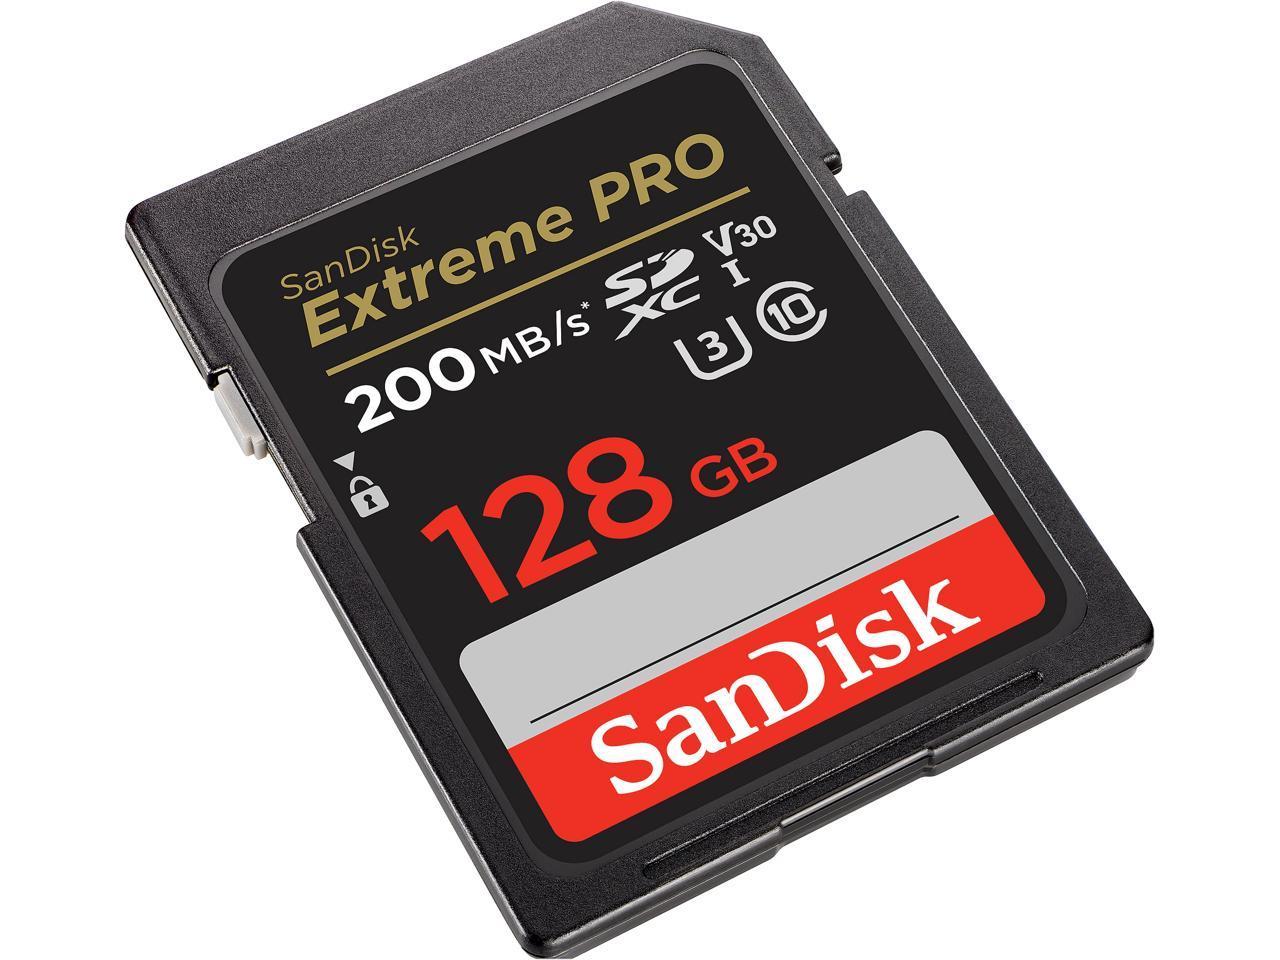 SANDISK 128G SD EXTREME PRO